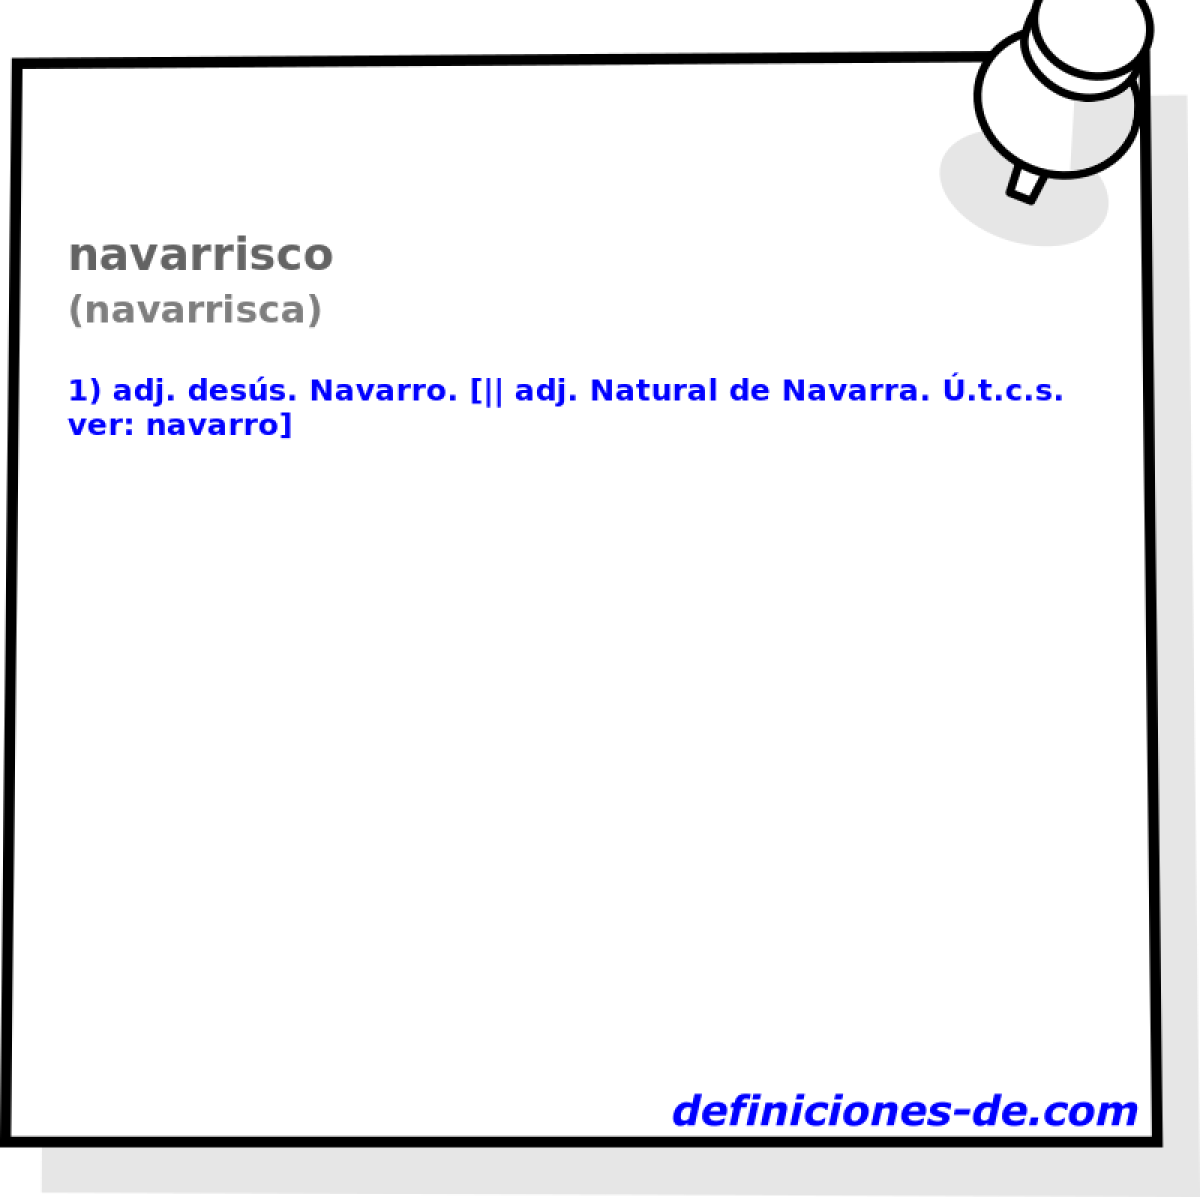 navarrisco (navarrisca)